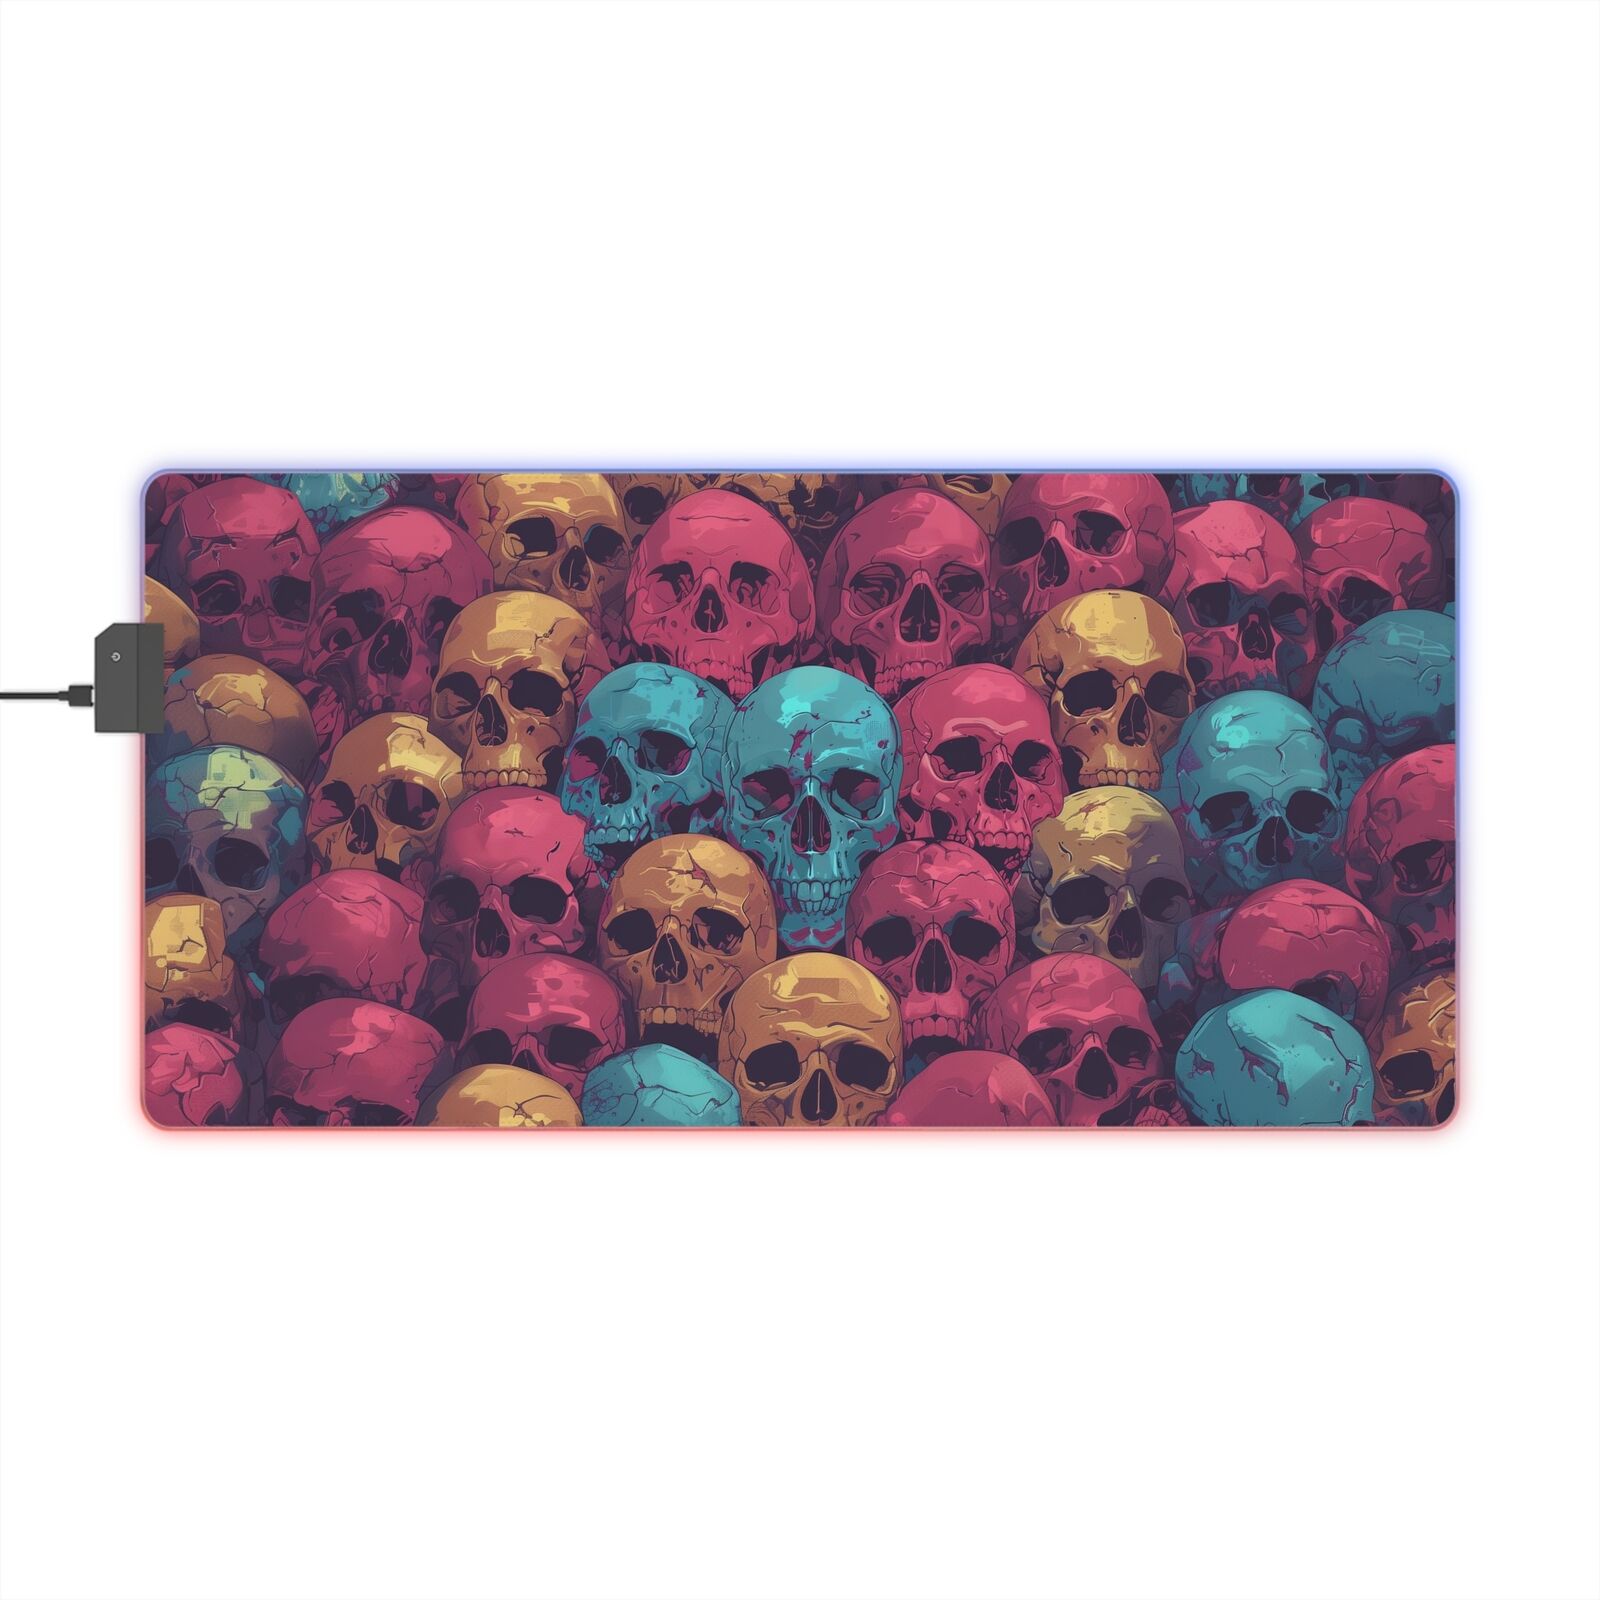 Colorful Skulls Desk Mat Office Decor Skeletons Theme LED Gaming Large Mouse Pad